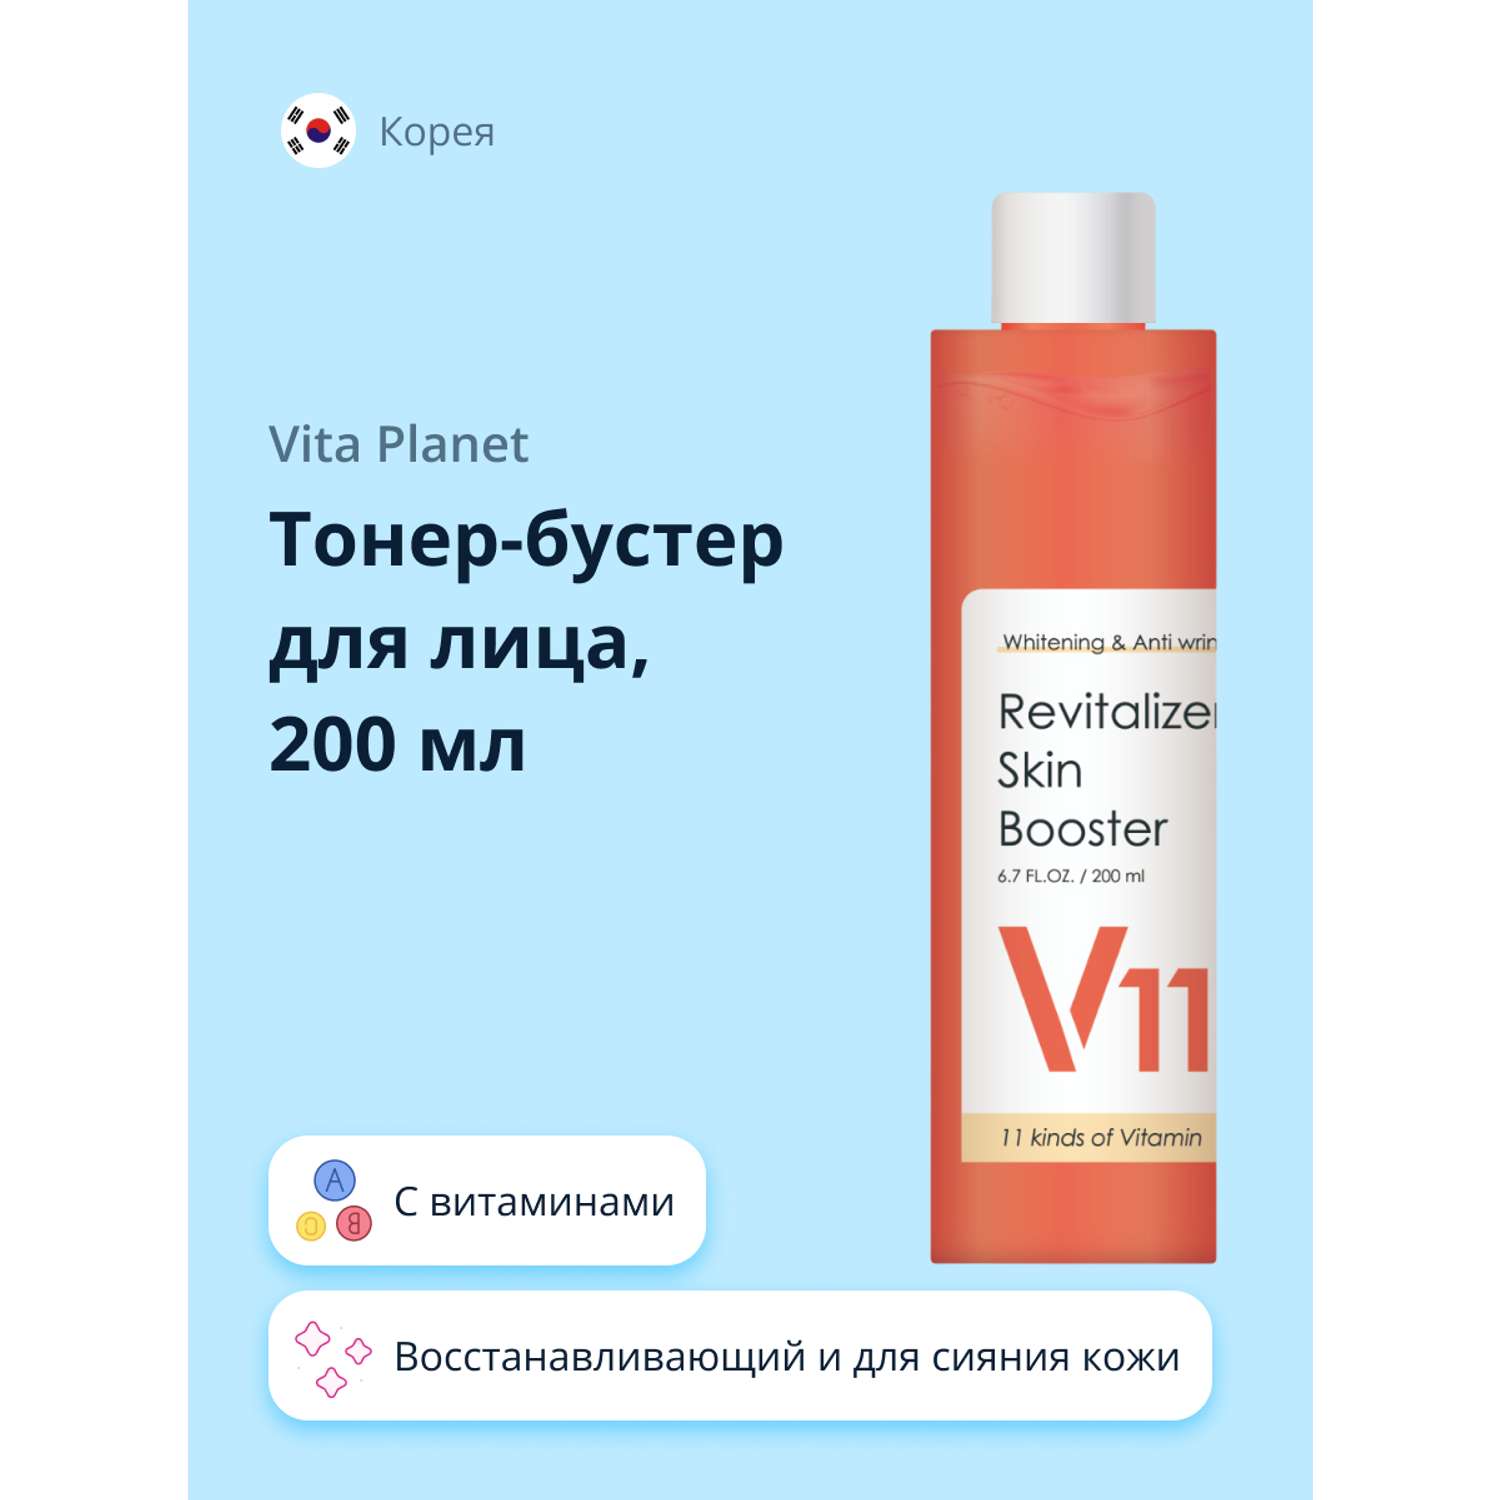 Тонер-бустер для лица Vita Planet V11 с витаминами (восстанавливающий и для сияния кожи) 200 мл - фото 1